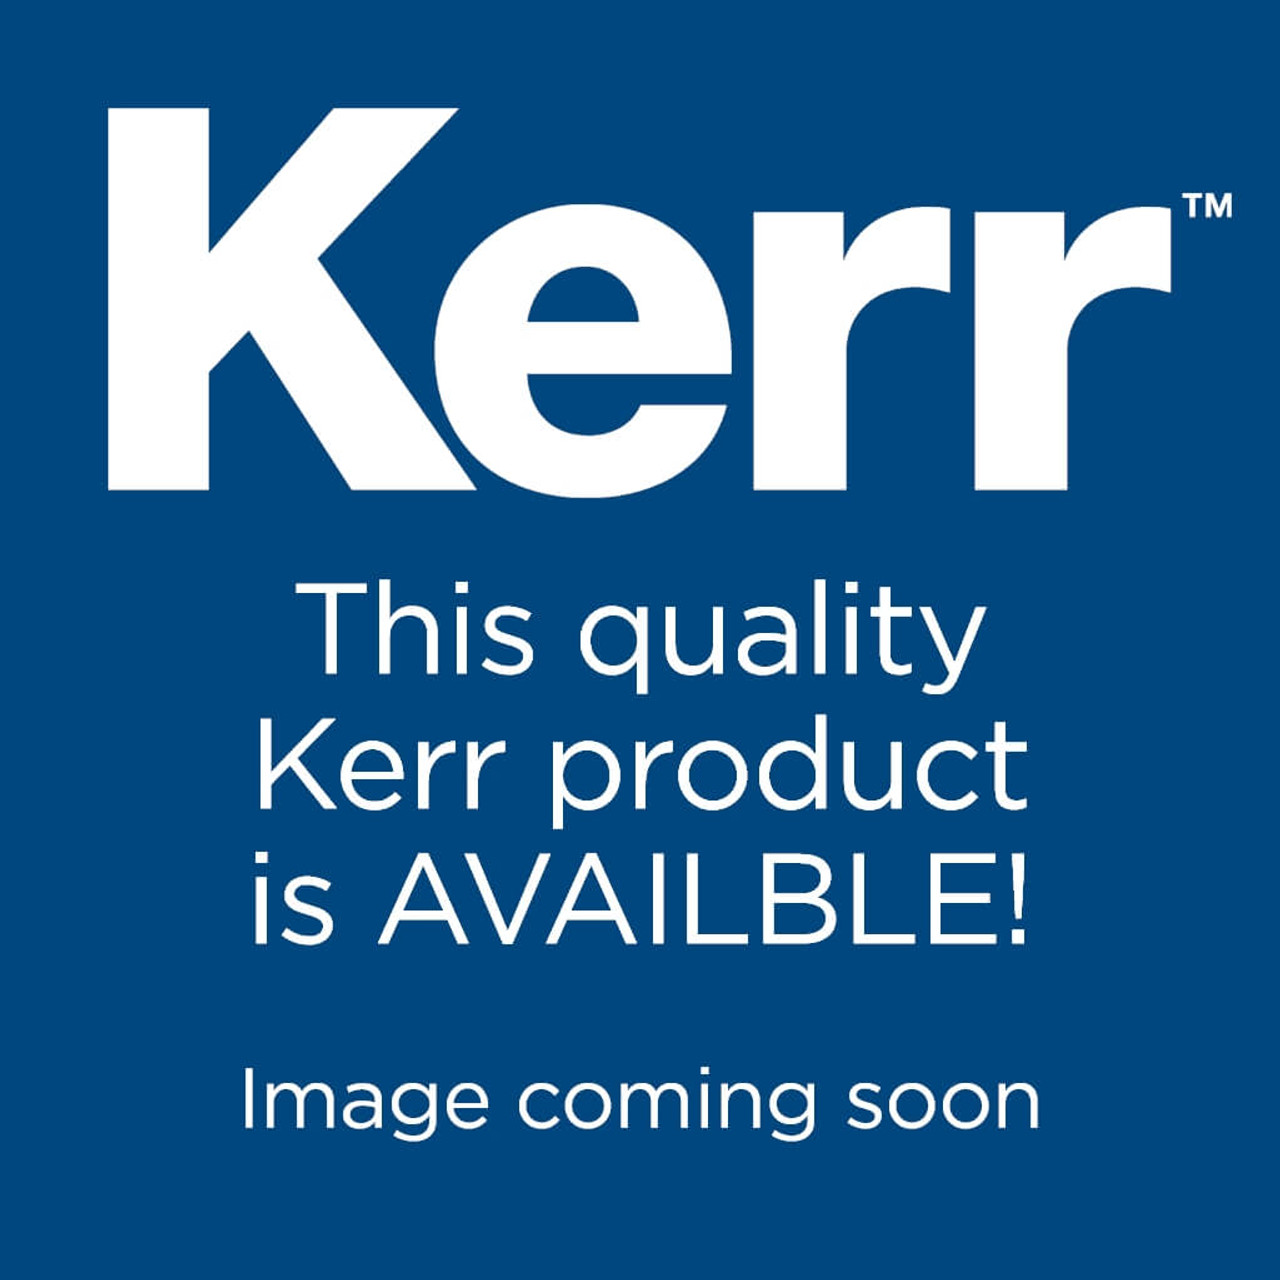 AXIS Blue CeraGlaze - RA, P3032-3, Kerr Dental